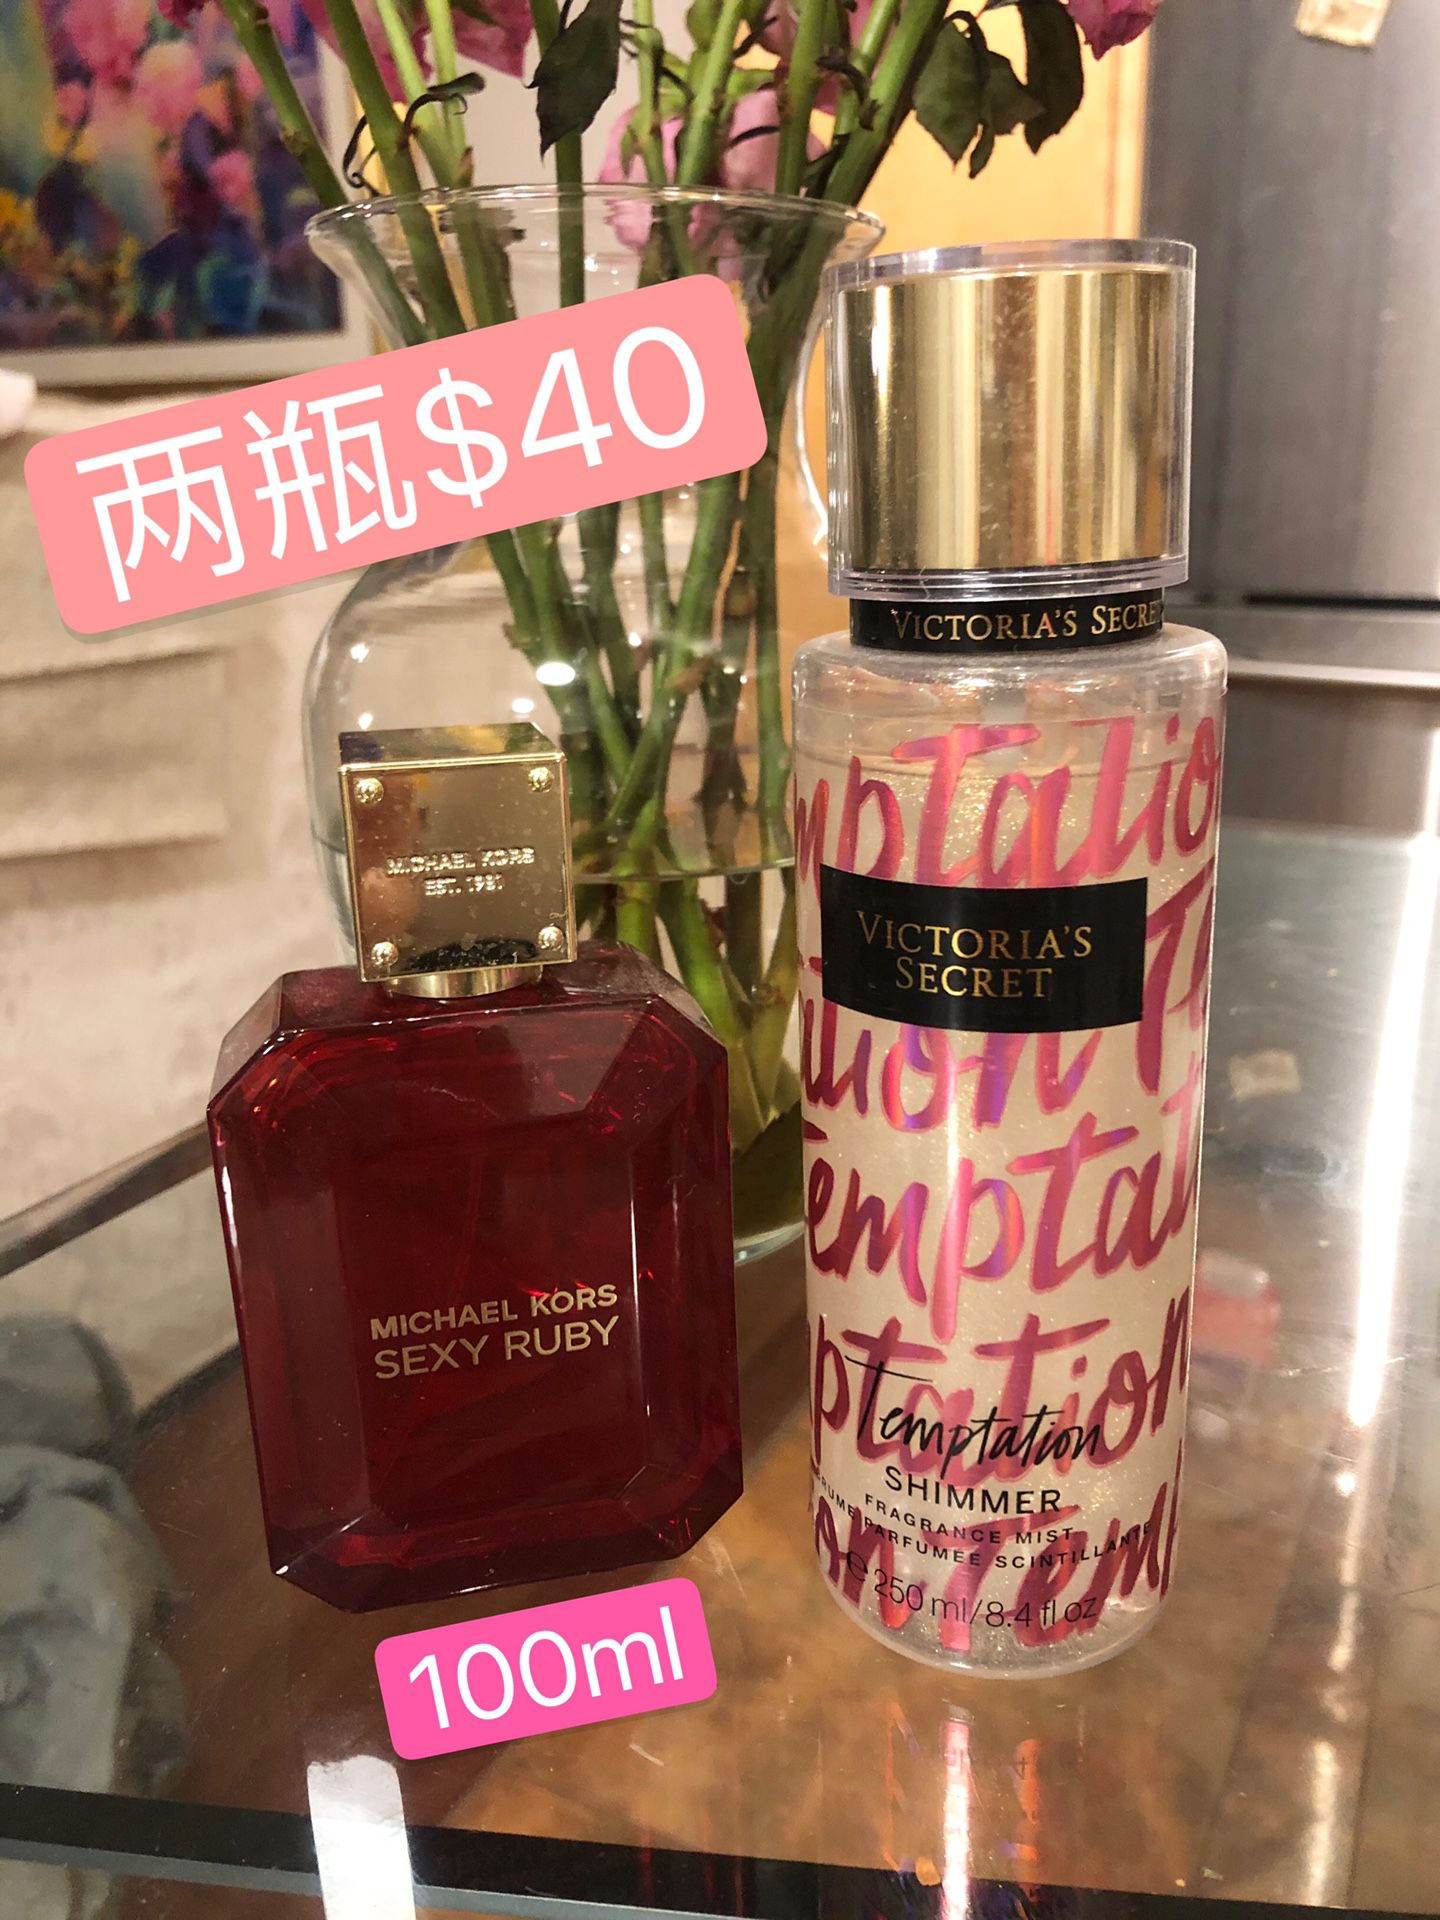 Michael Kors sexy ruby perfume